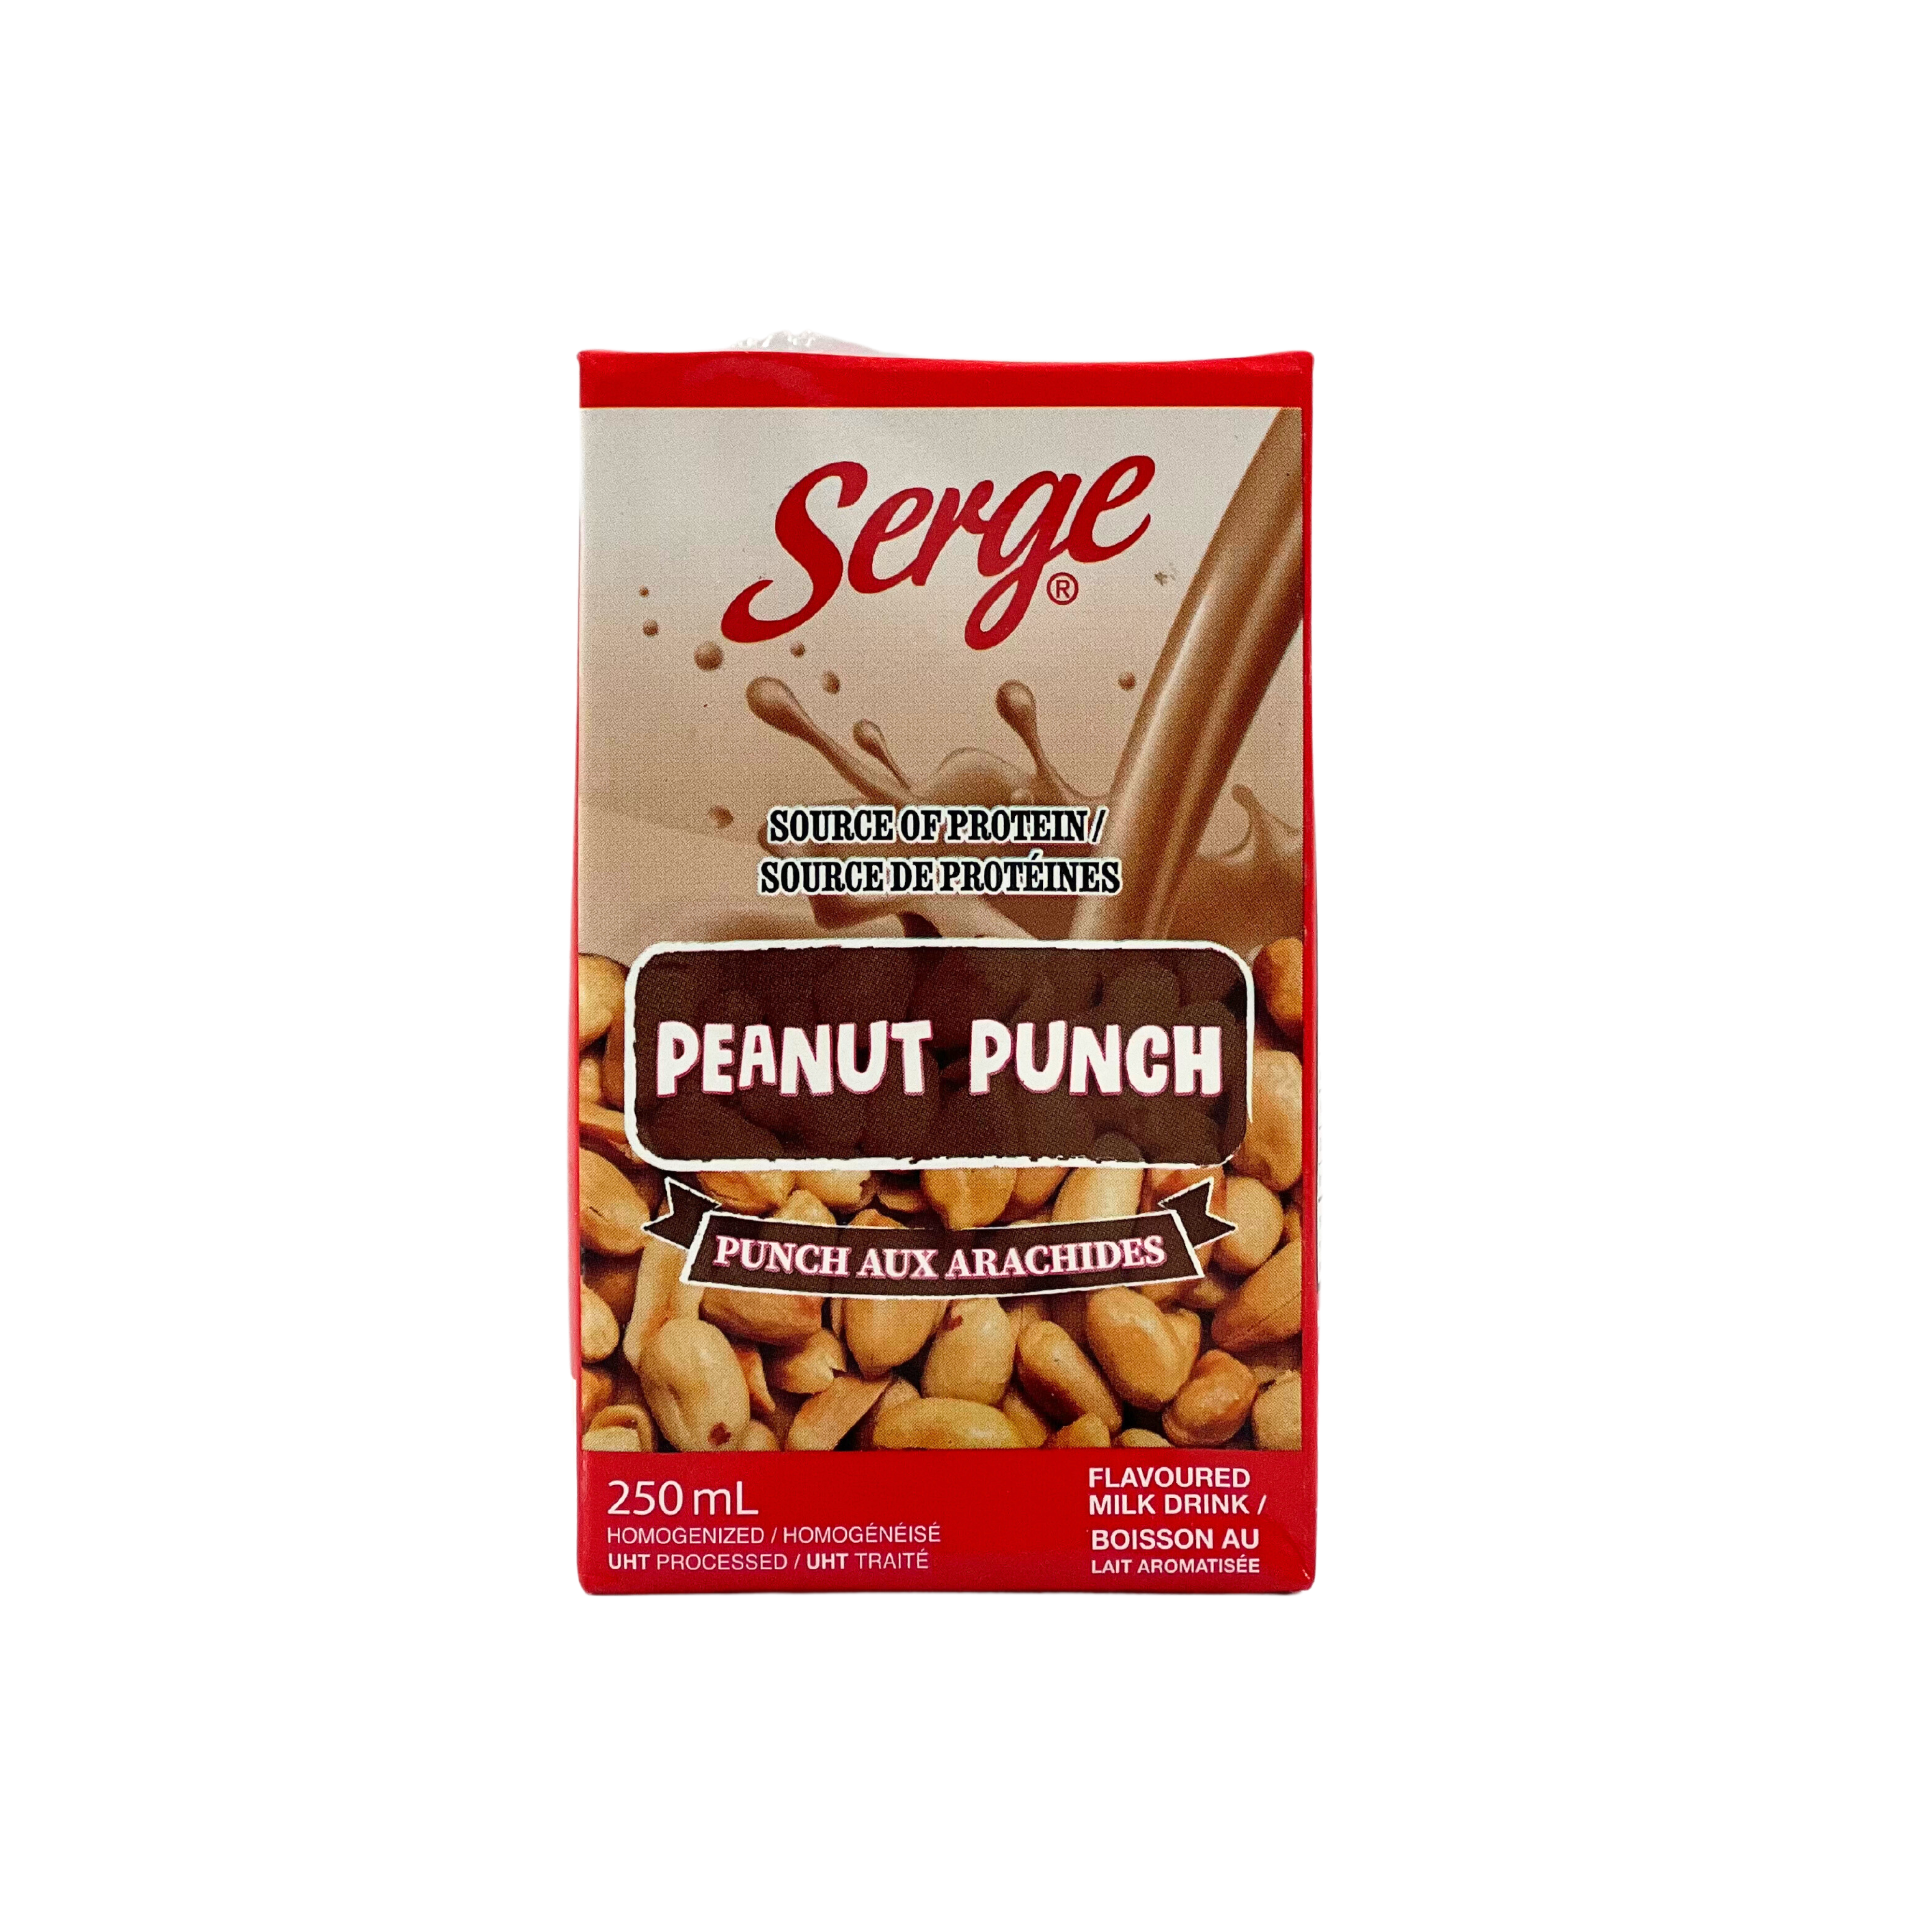 Serge Peanut Punch 250ml